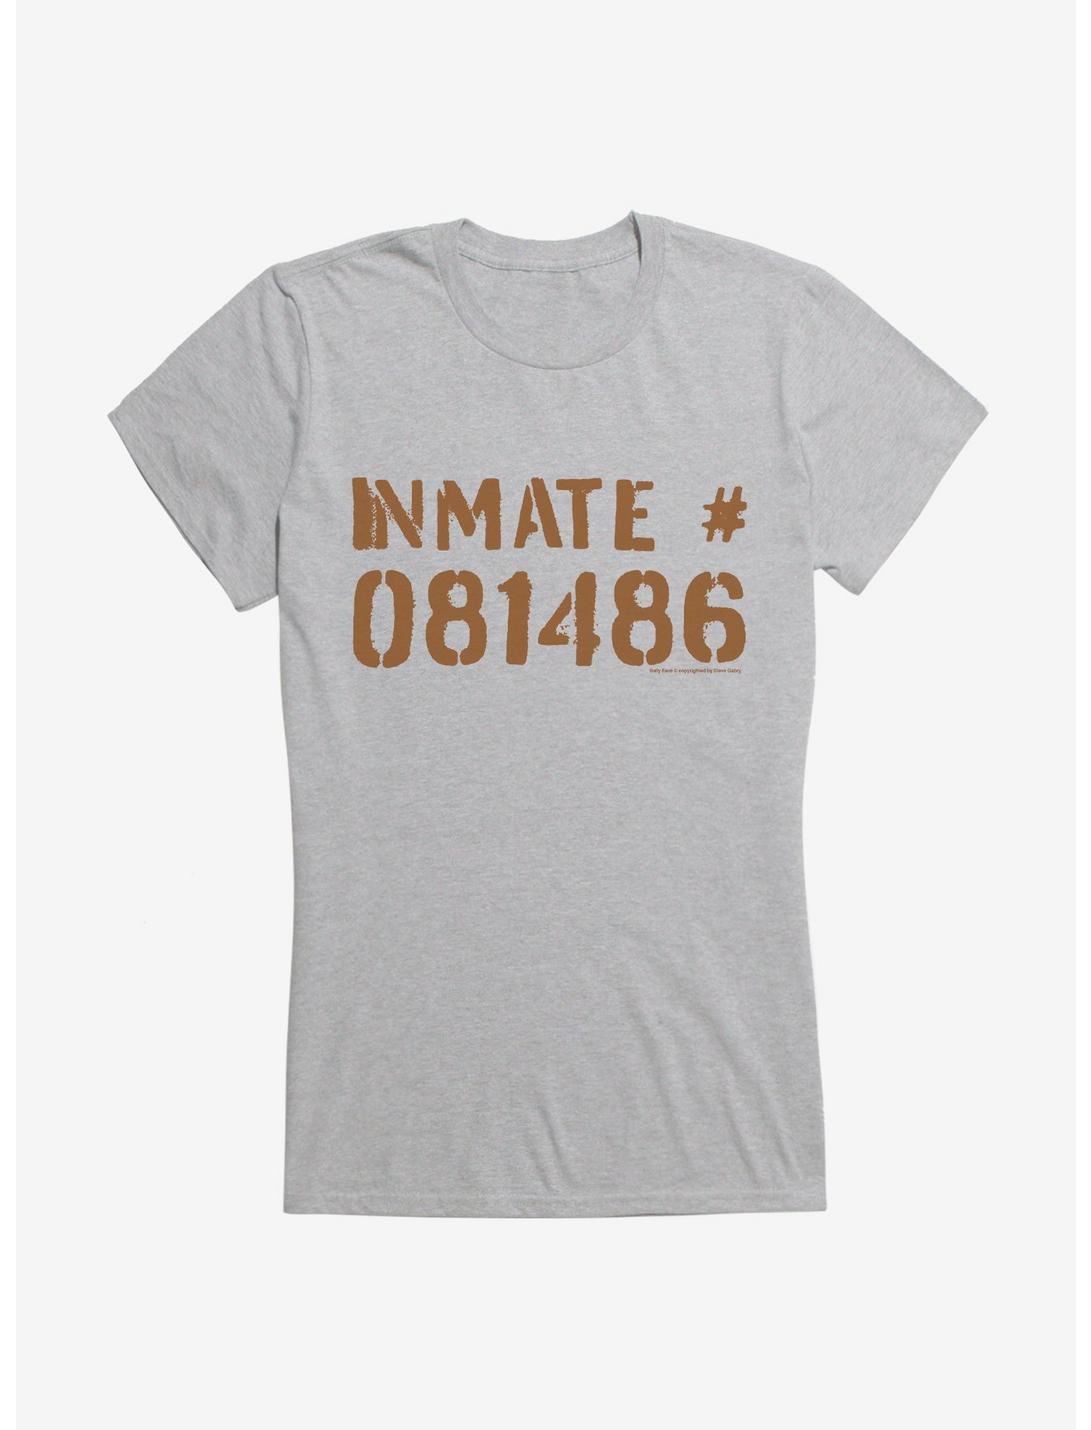 Sally Face Inmate 081486 Girls T-Shirt, HEATHER, hi-res